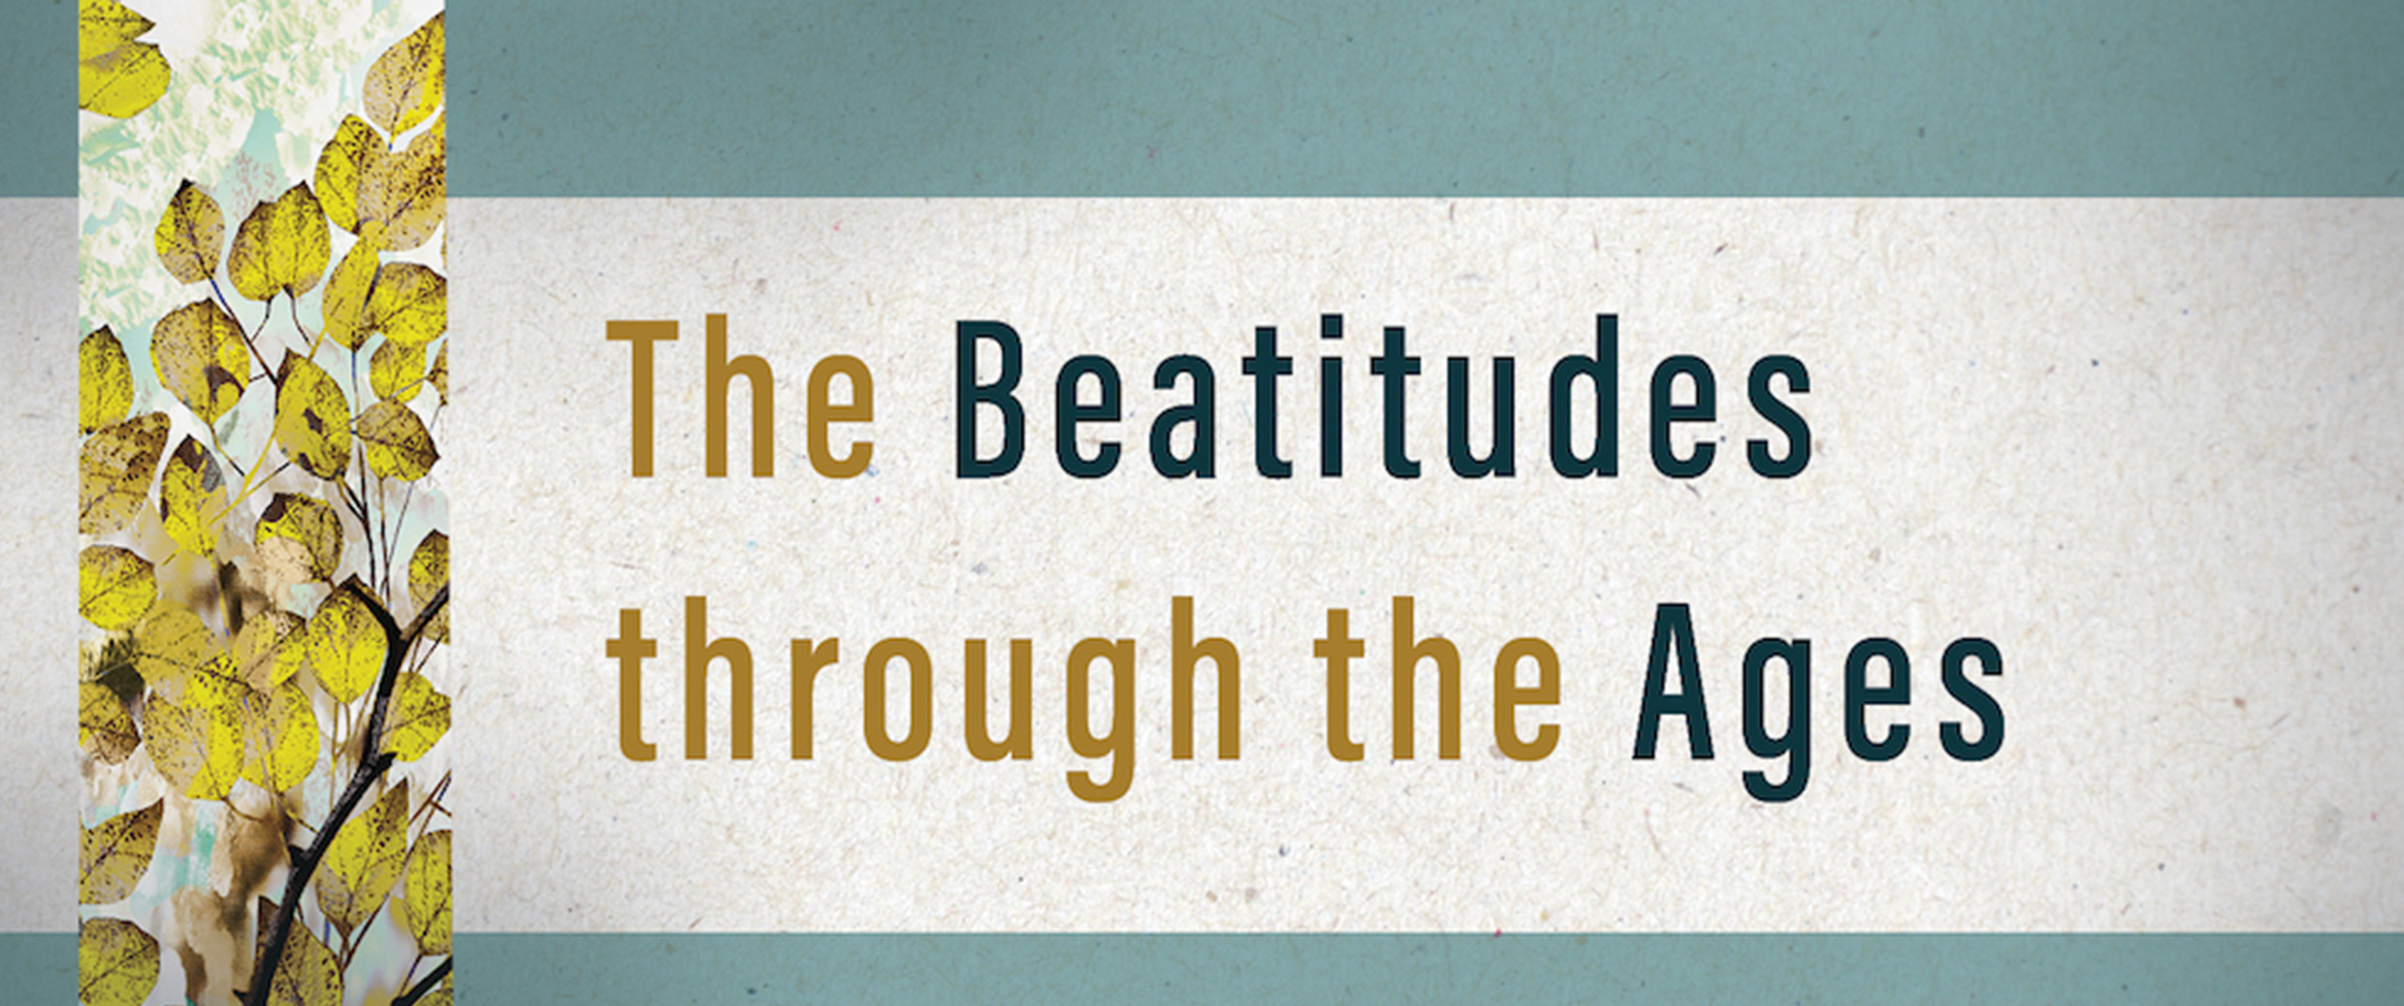 The Beatitudes Through the Ages